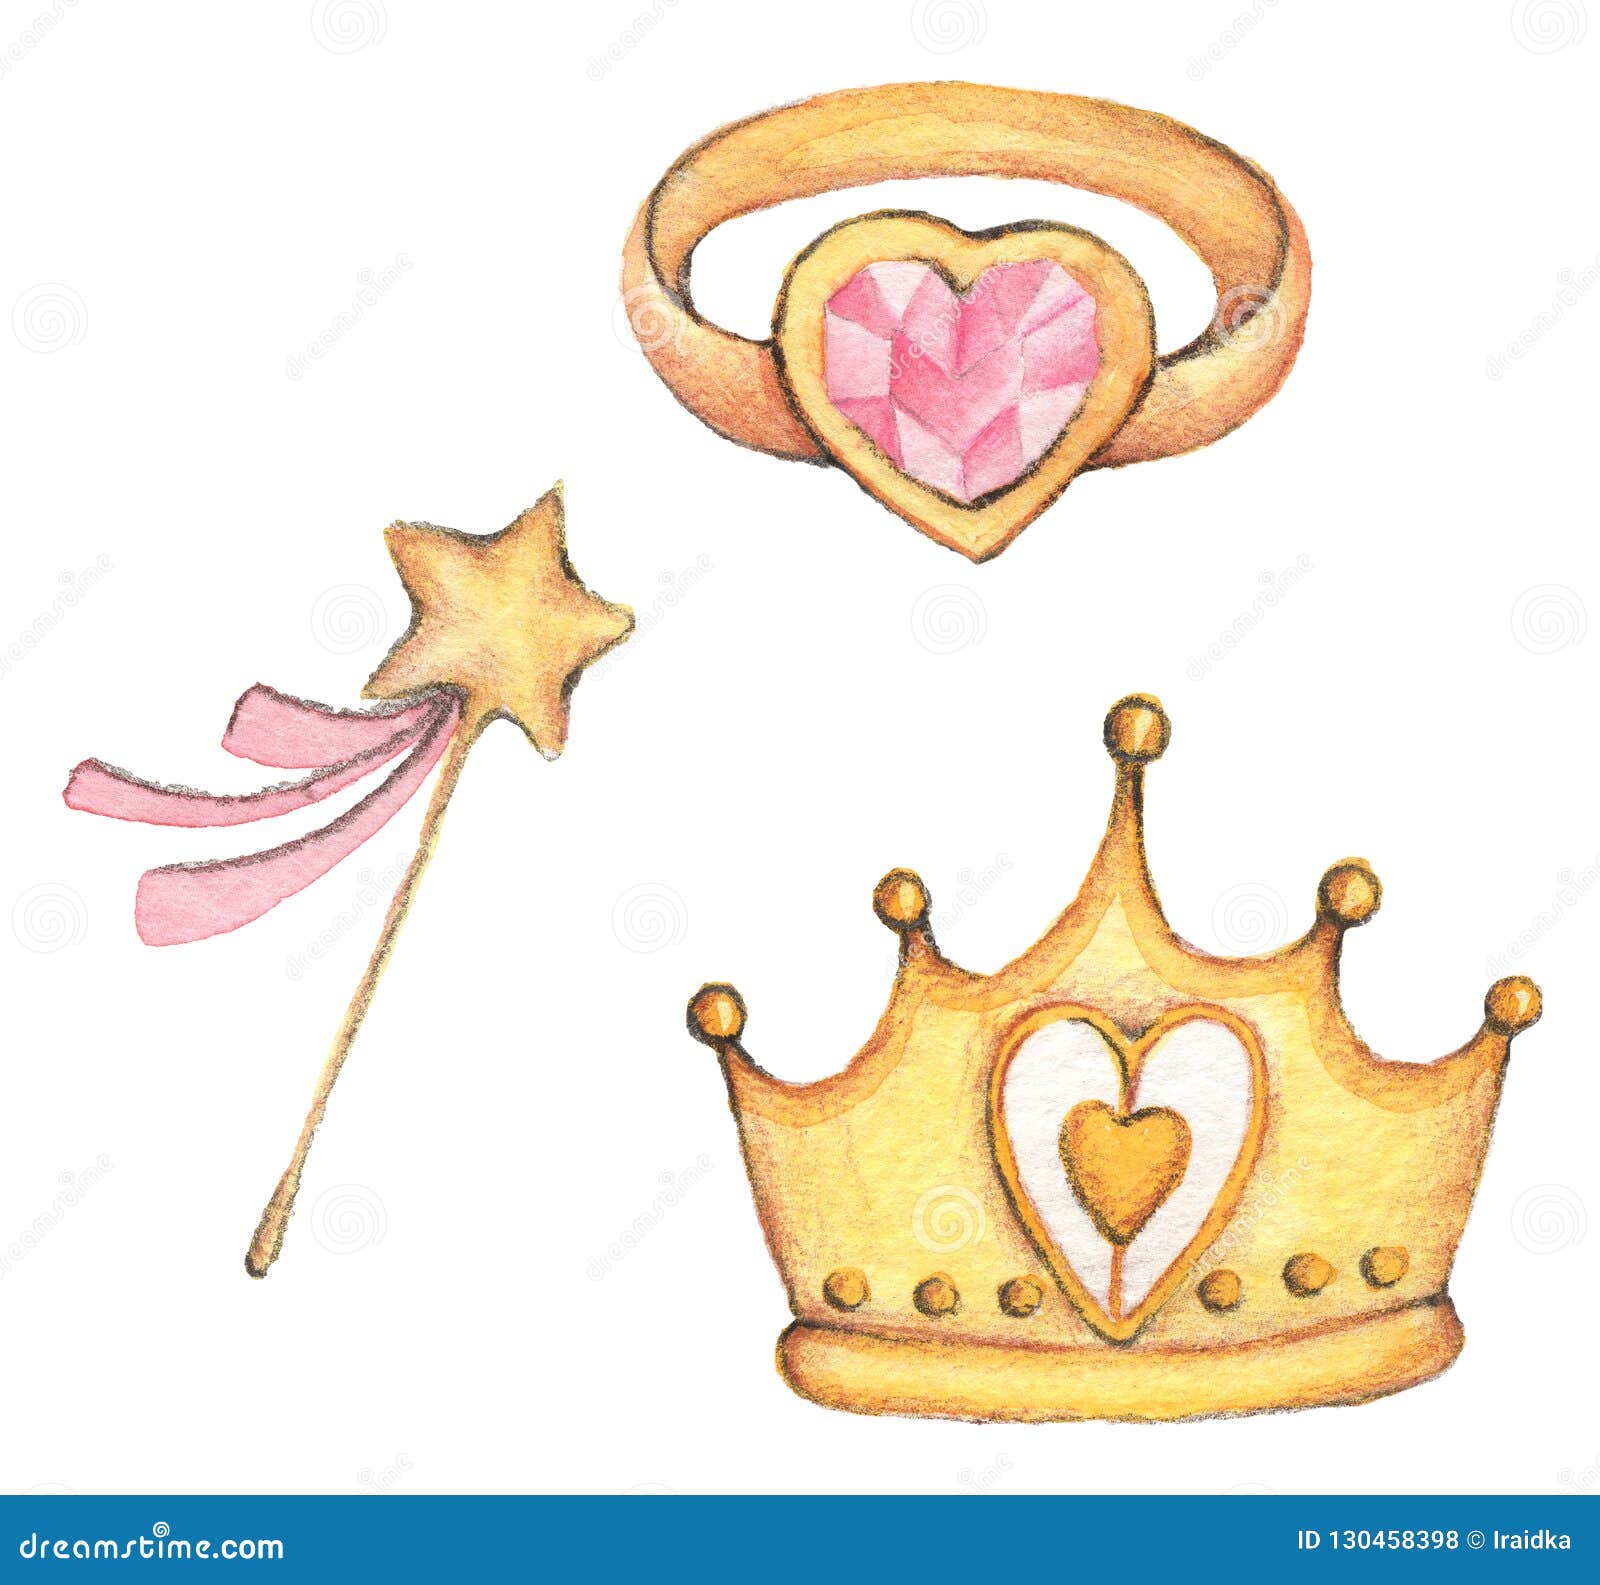 Kids Princess Crown Ring - Simply Silver